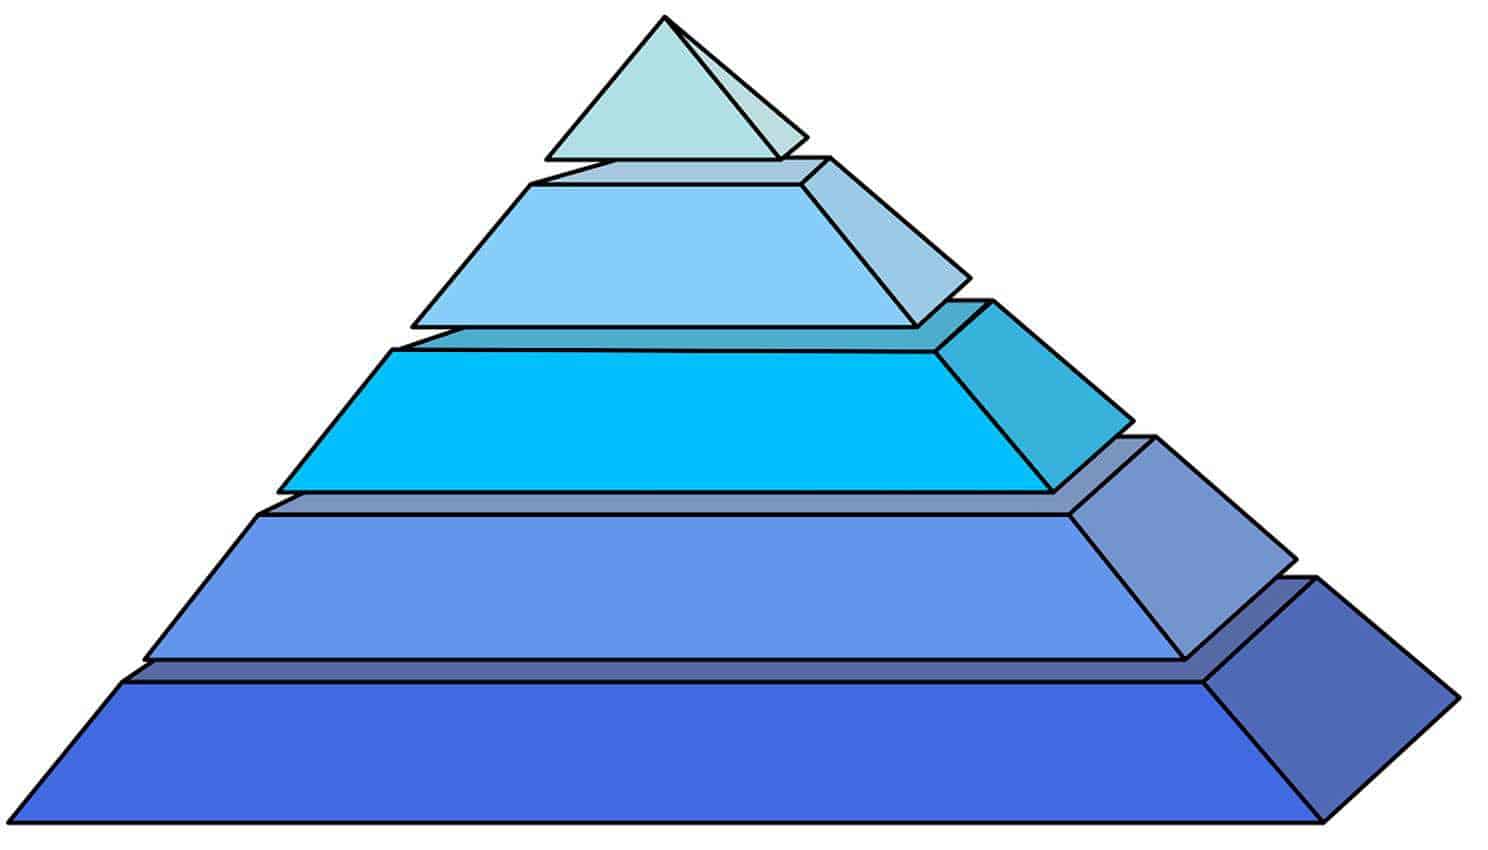 La Pyramide De Maslow De La Liberte Financiere 1 2 3 Richesse